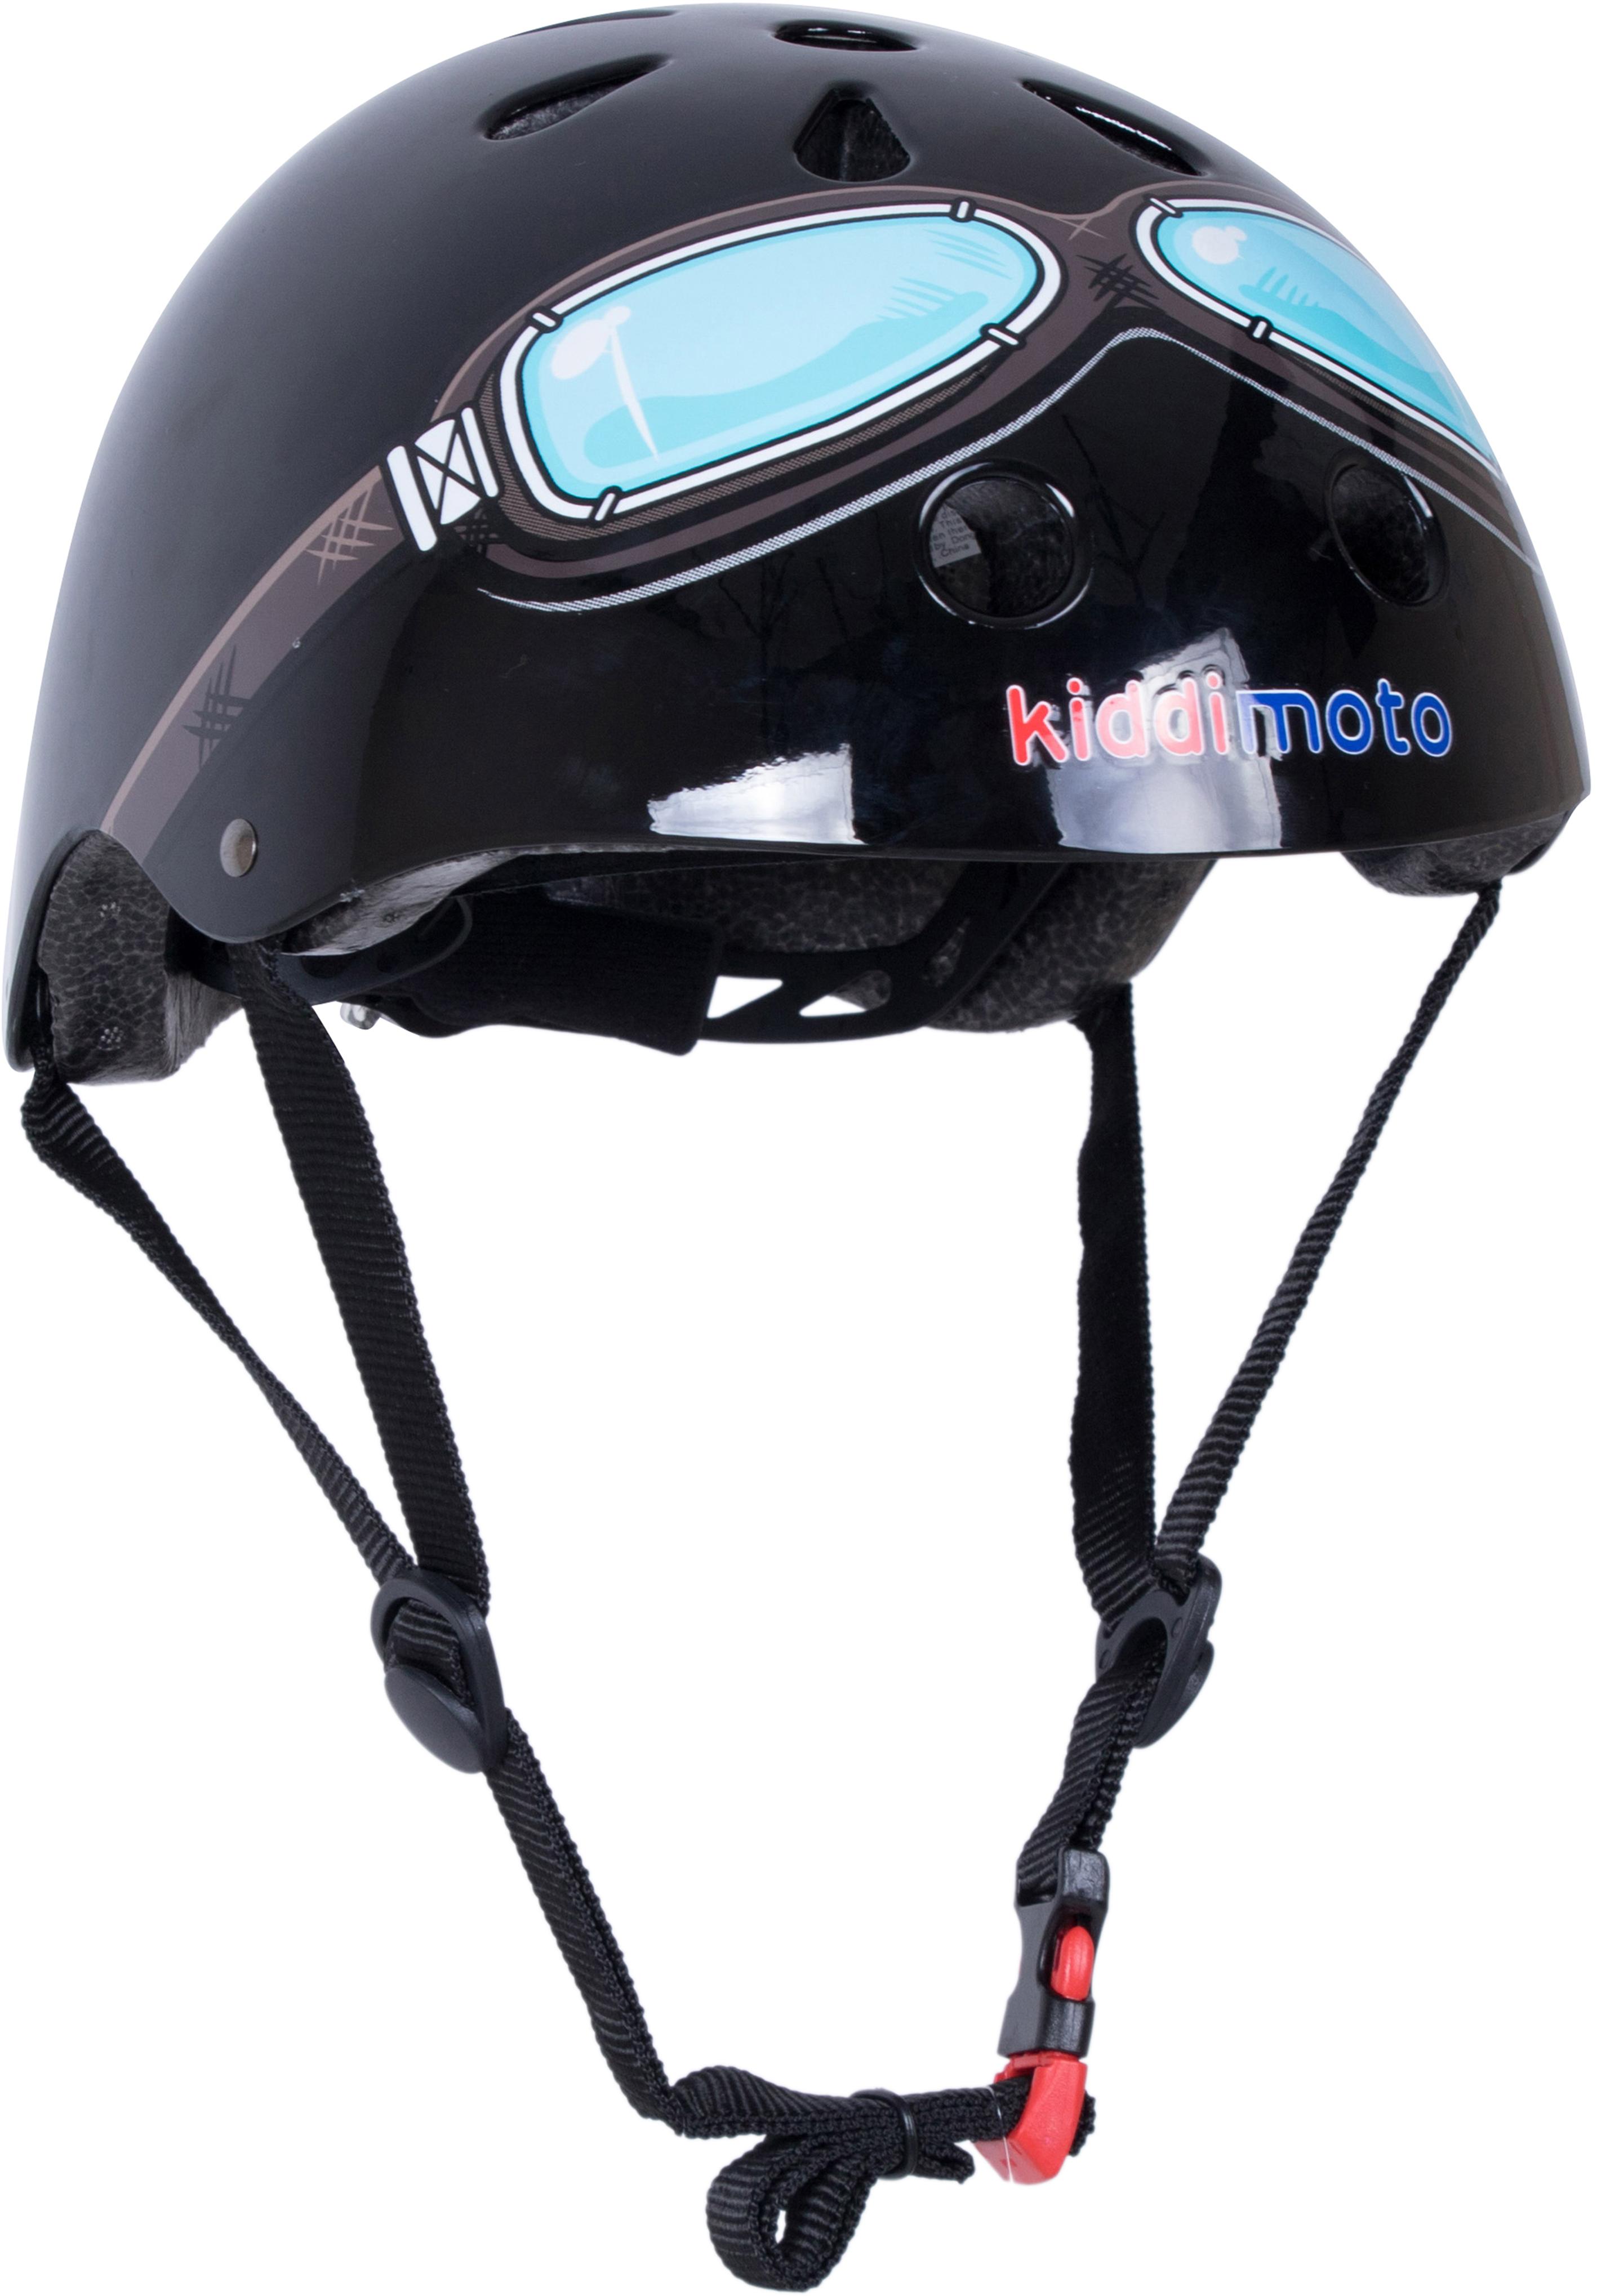 Kiddimoto Black Goggle Helmet - Small